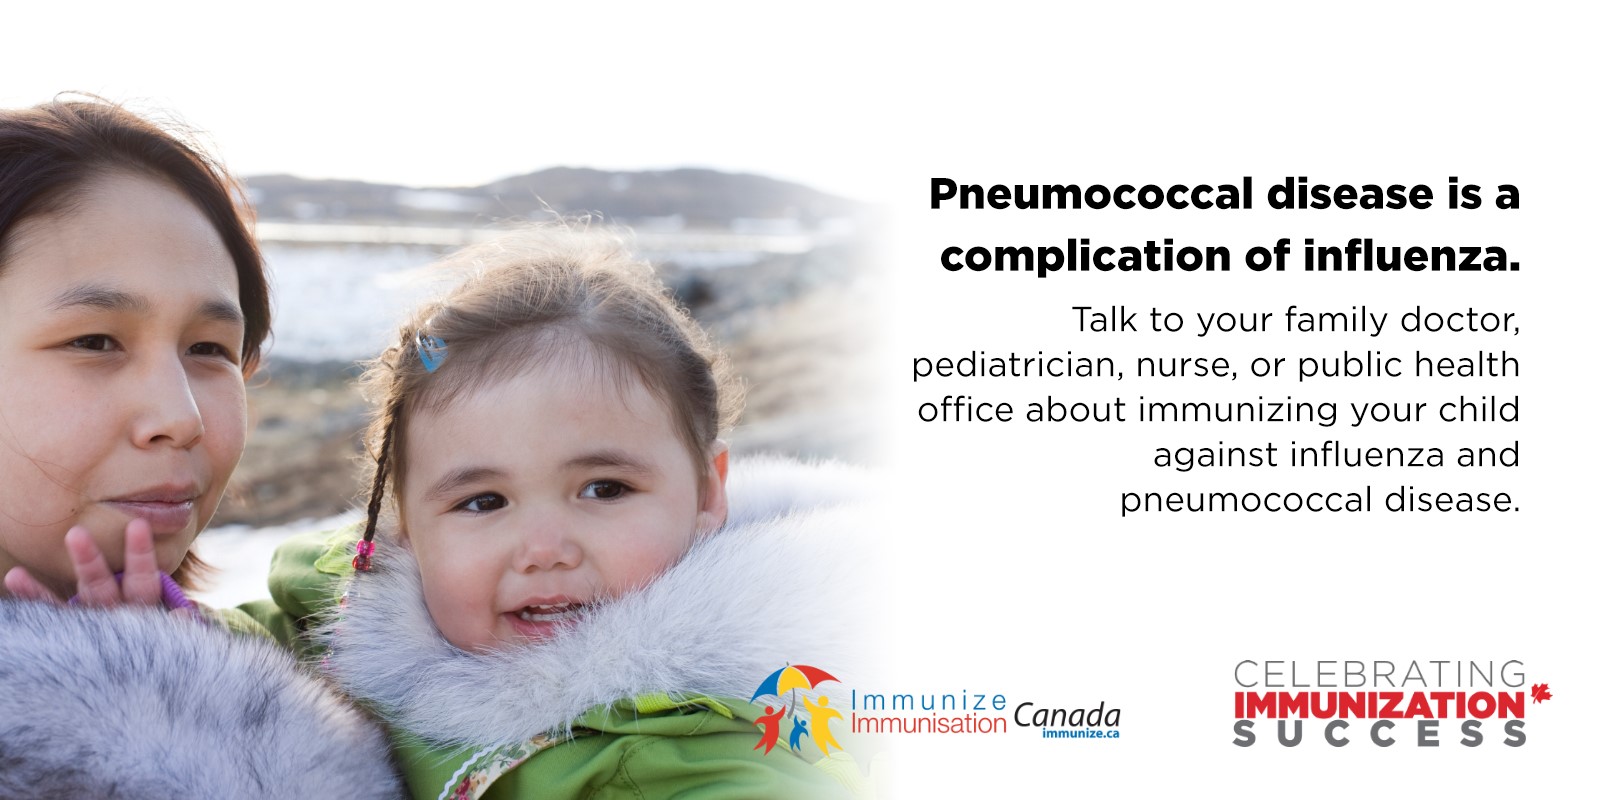 Pneumococcal disease is a complication of influenza - children under 2